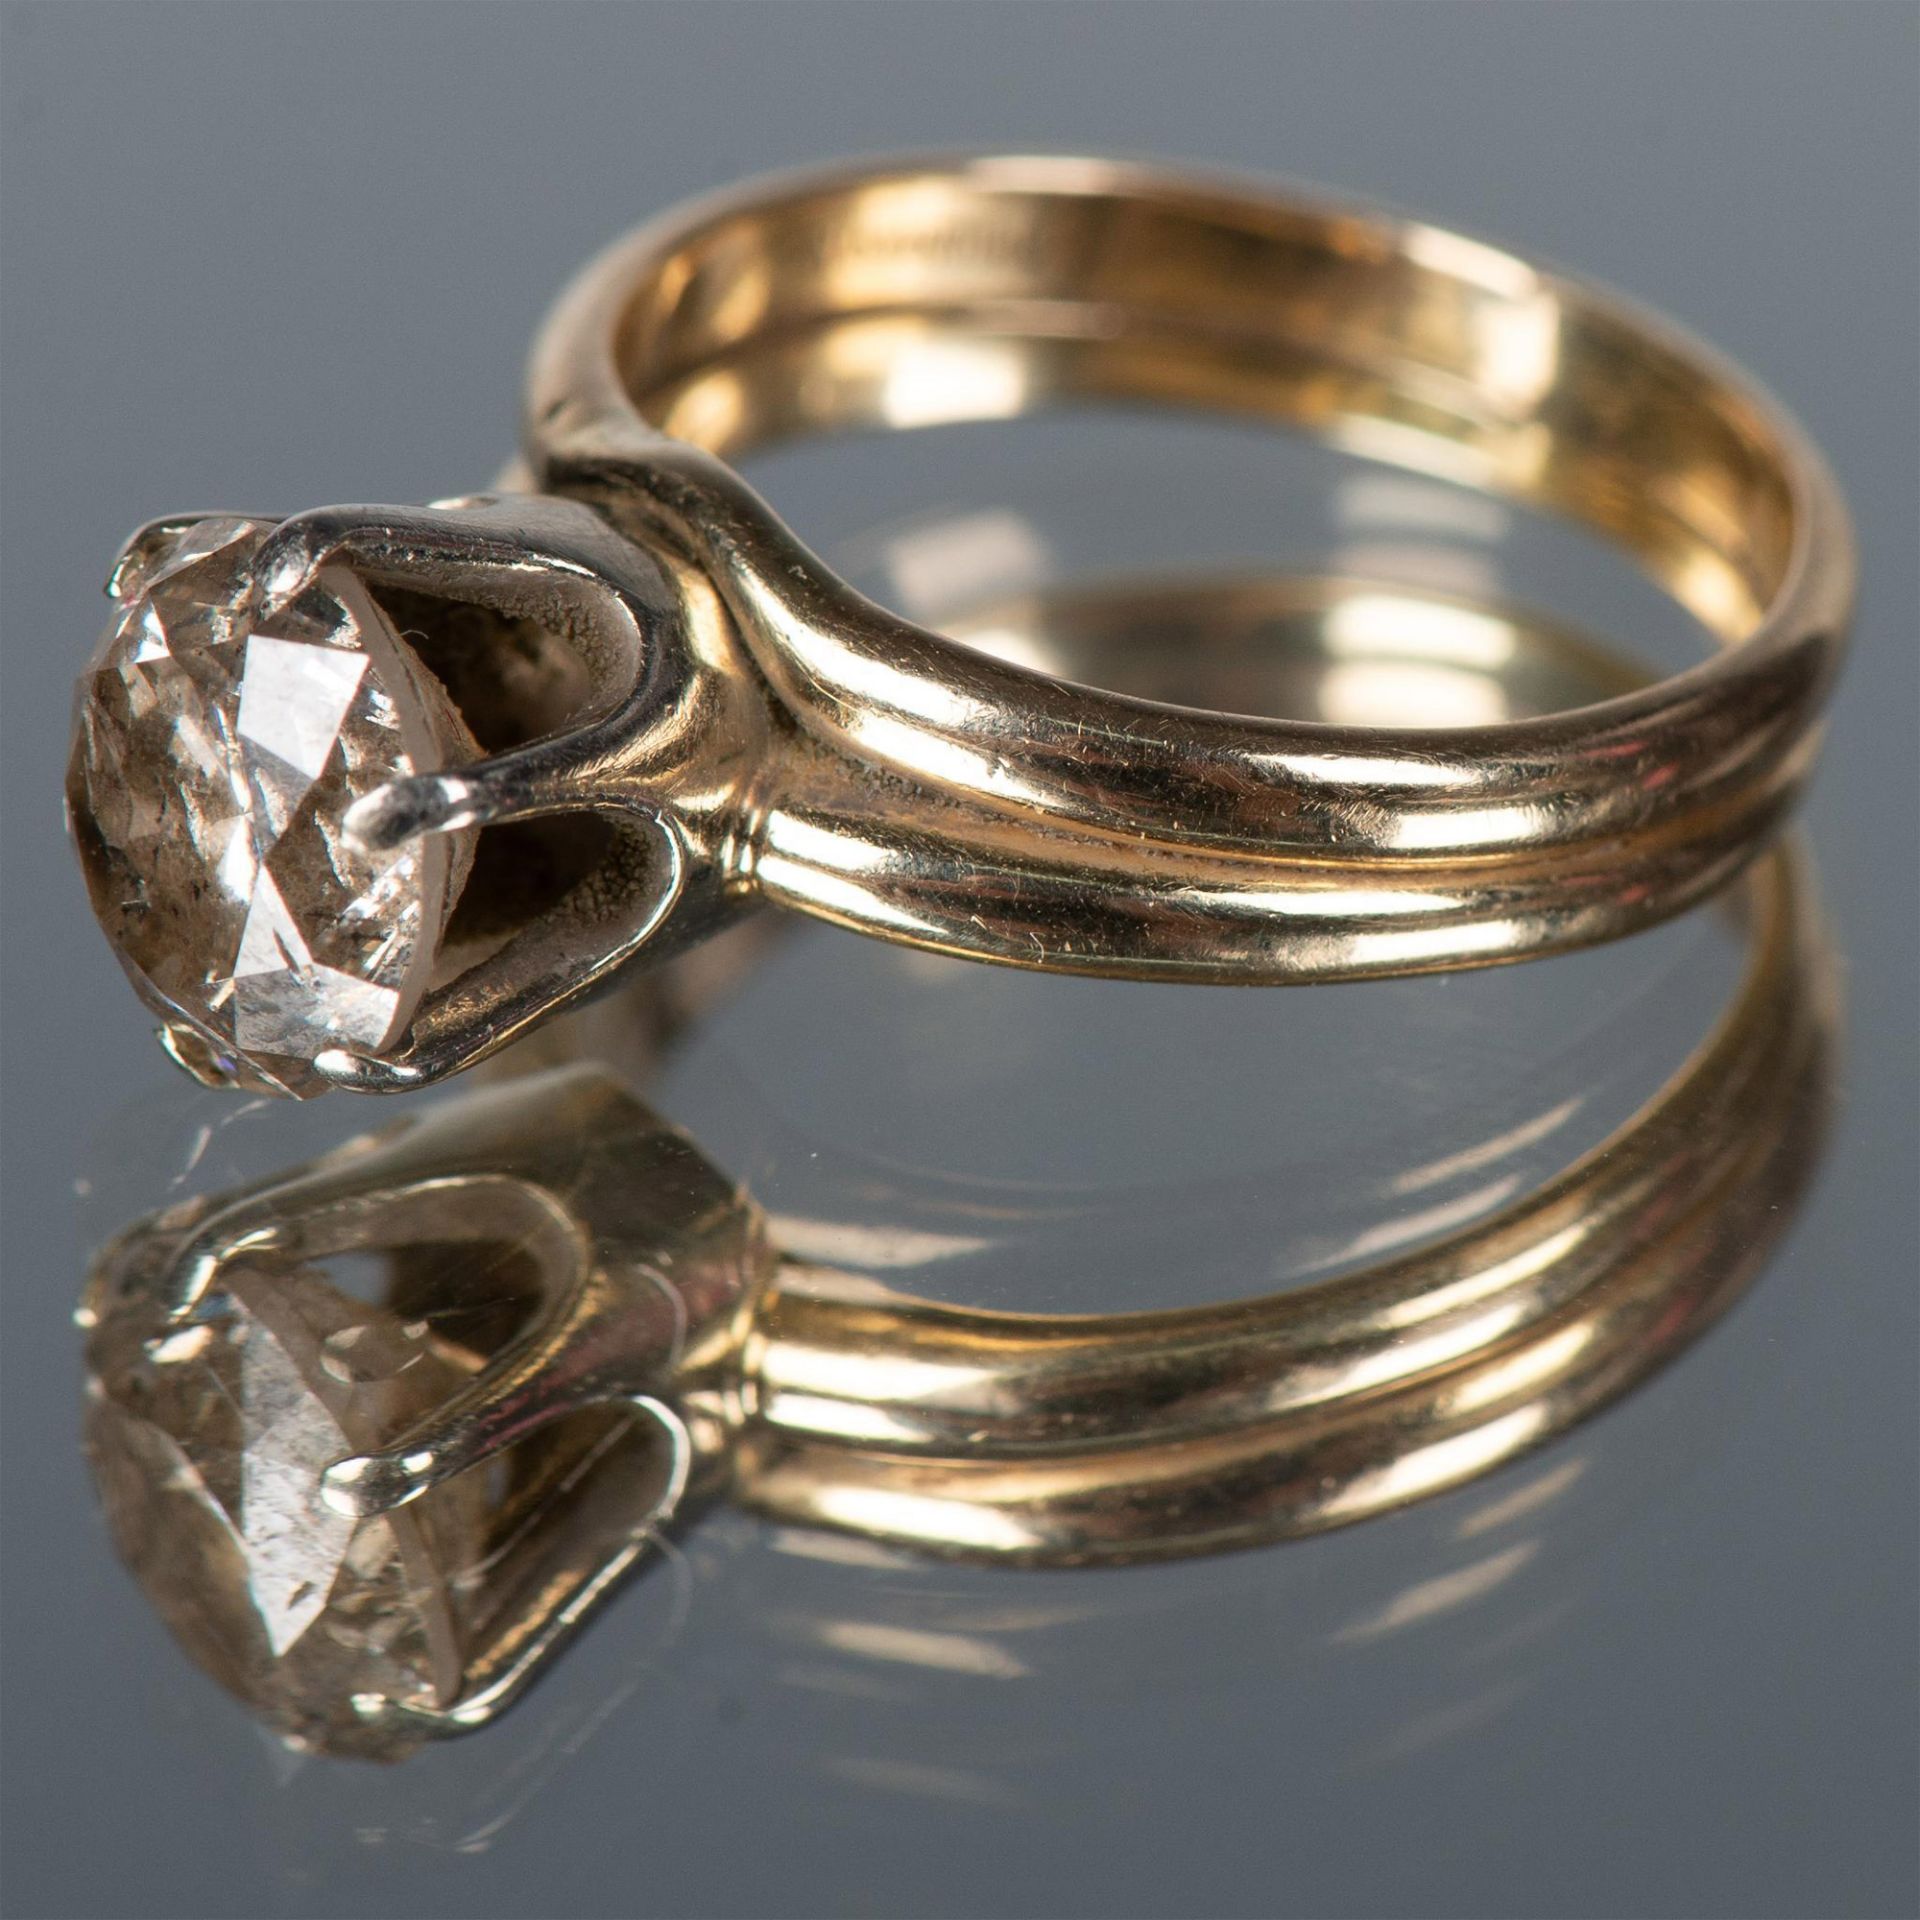 Stunning 3ct Diamond Ring in 14K Gold - Image 2 of 5